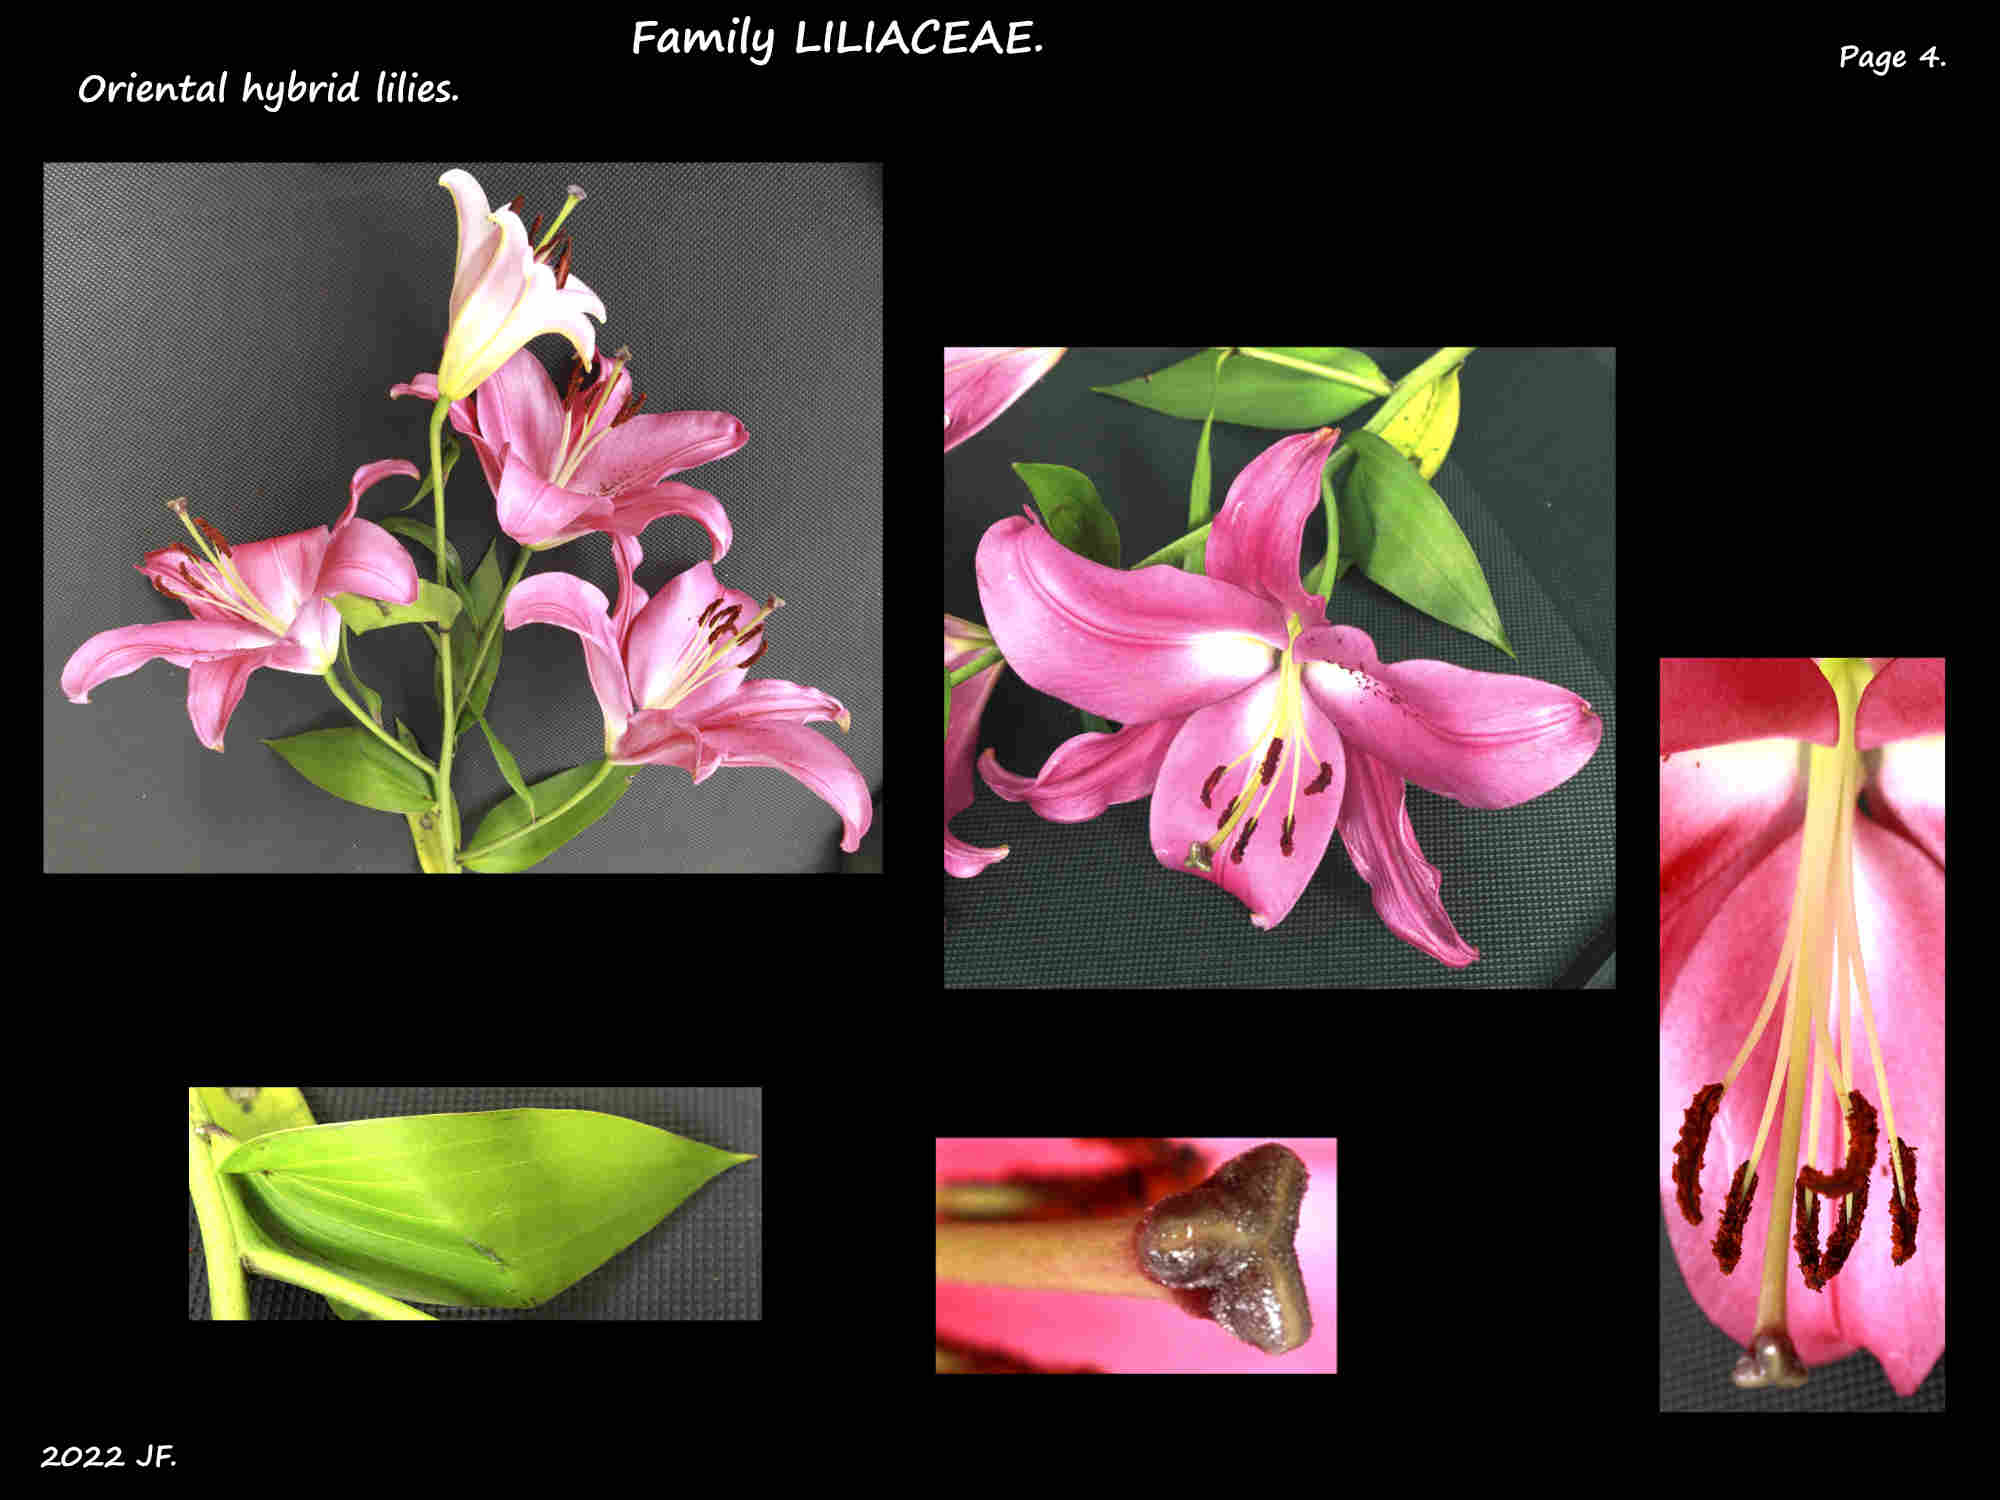 5 Red Oriental hybrid lilies